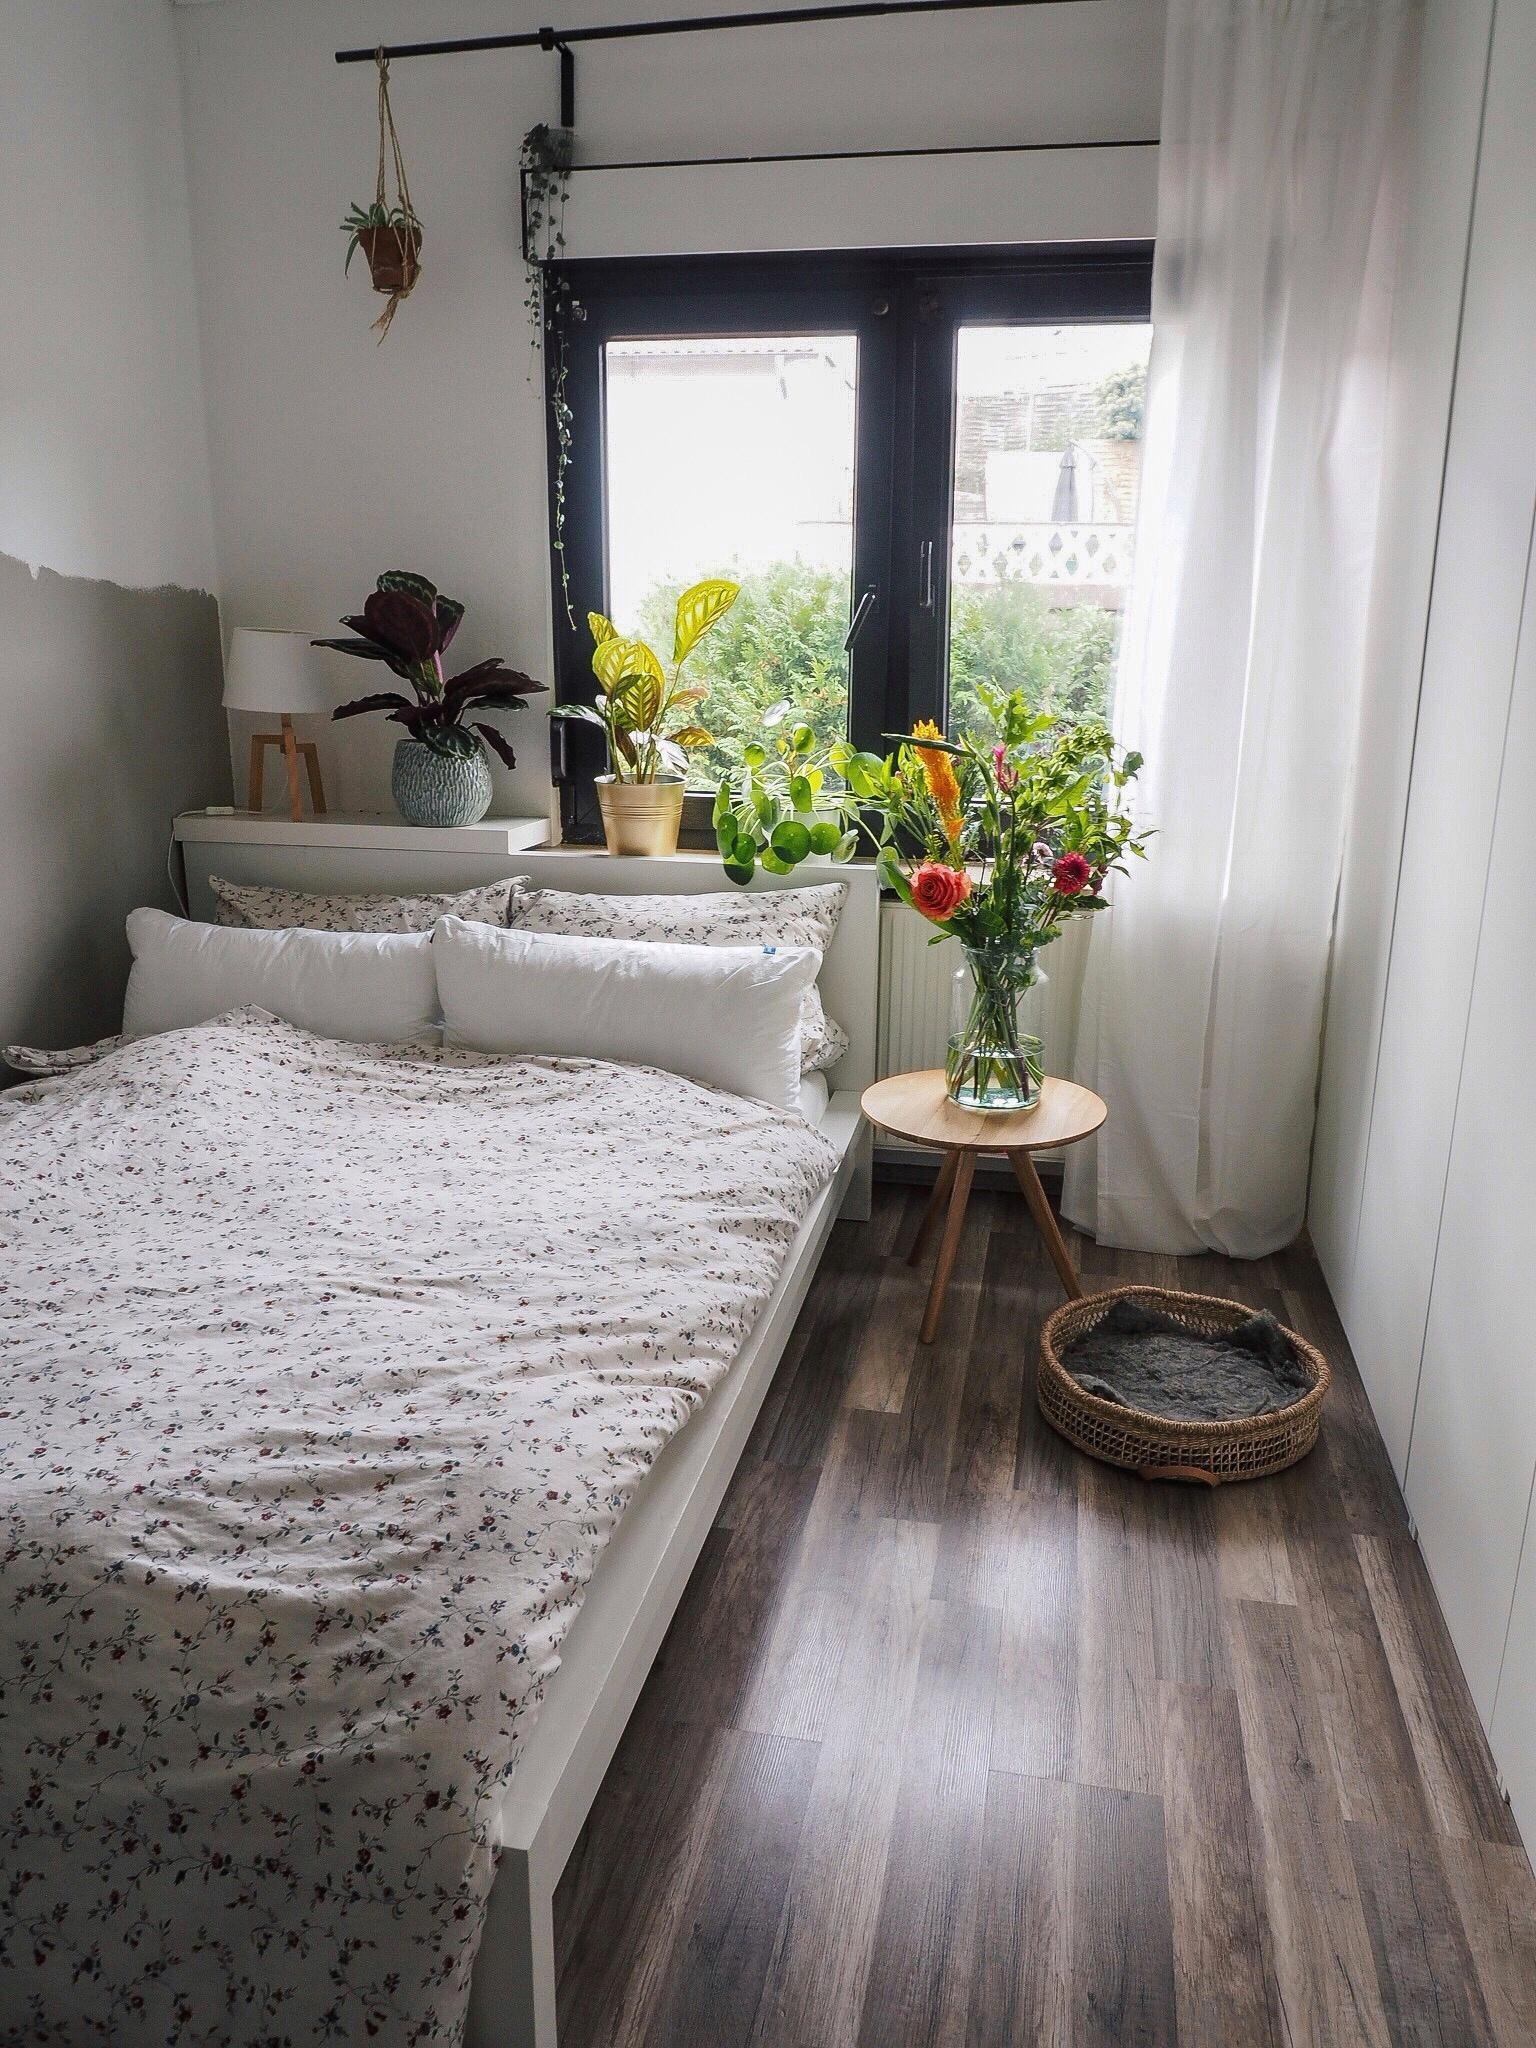 Bedroom.
#couchliebt #bedroom #flowers #skandistyle #whiteliving 